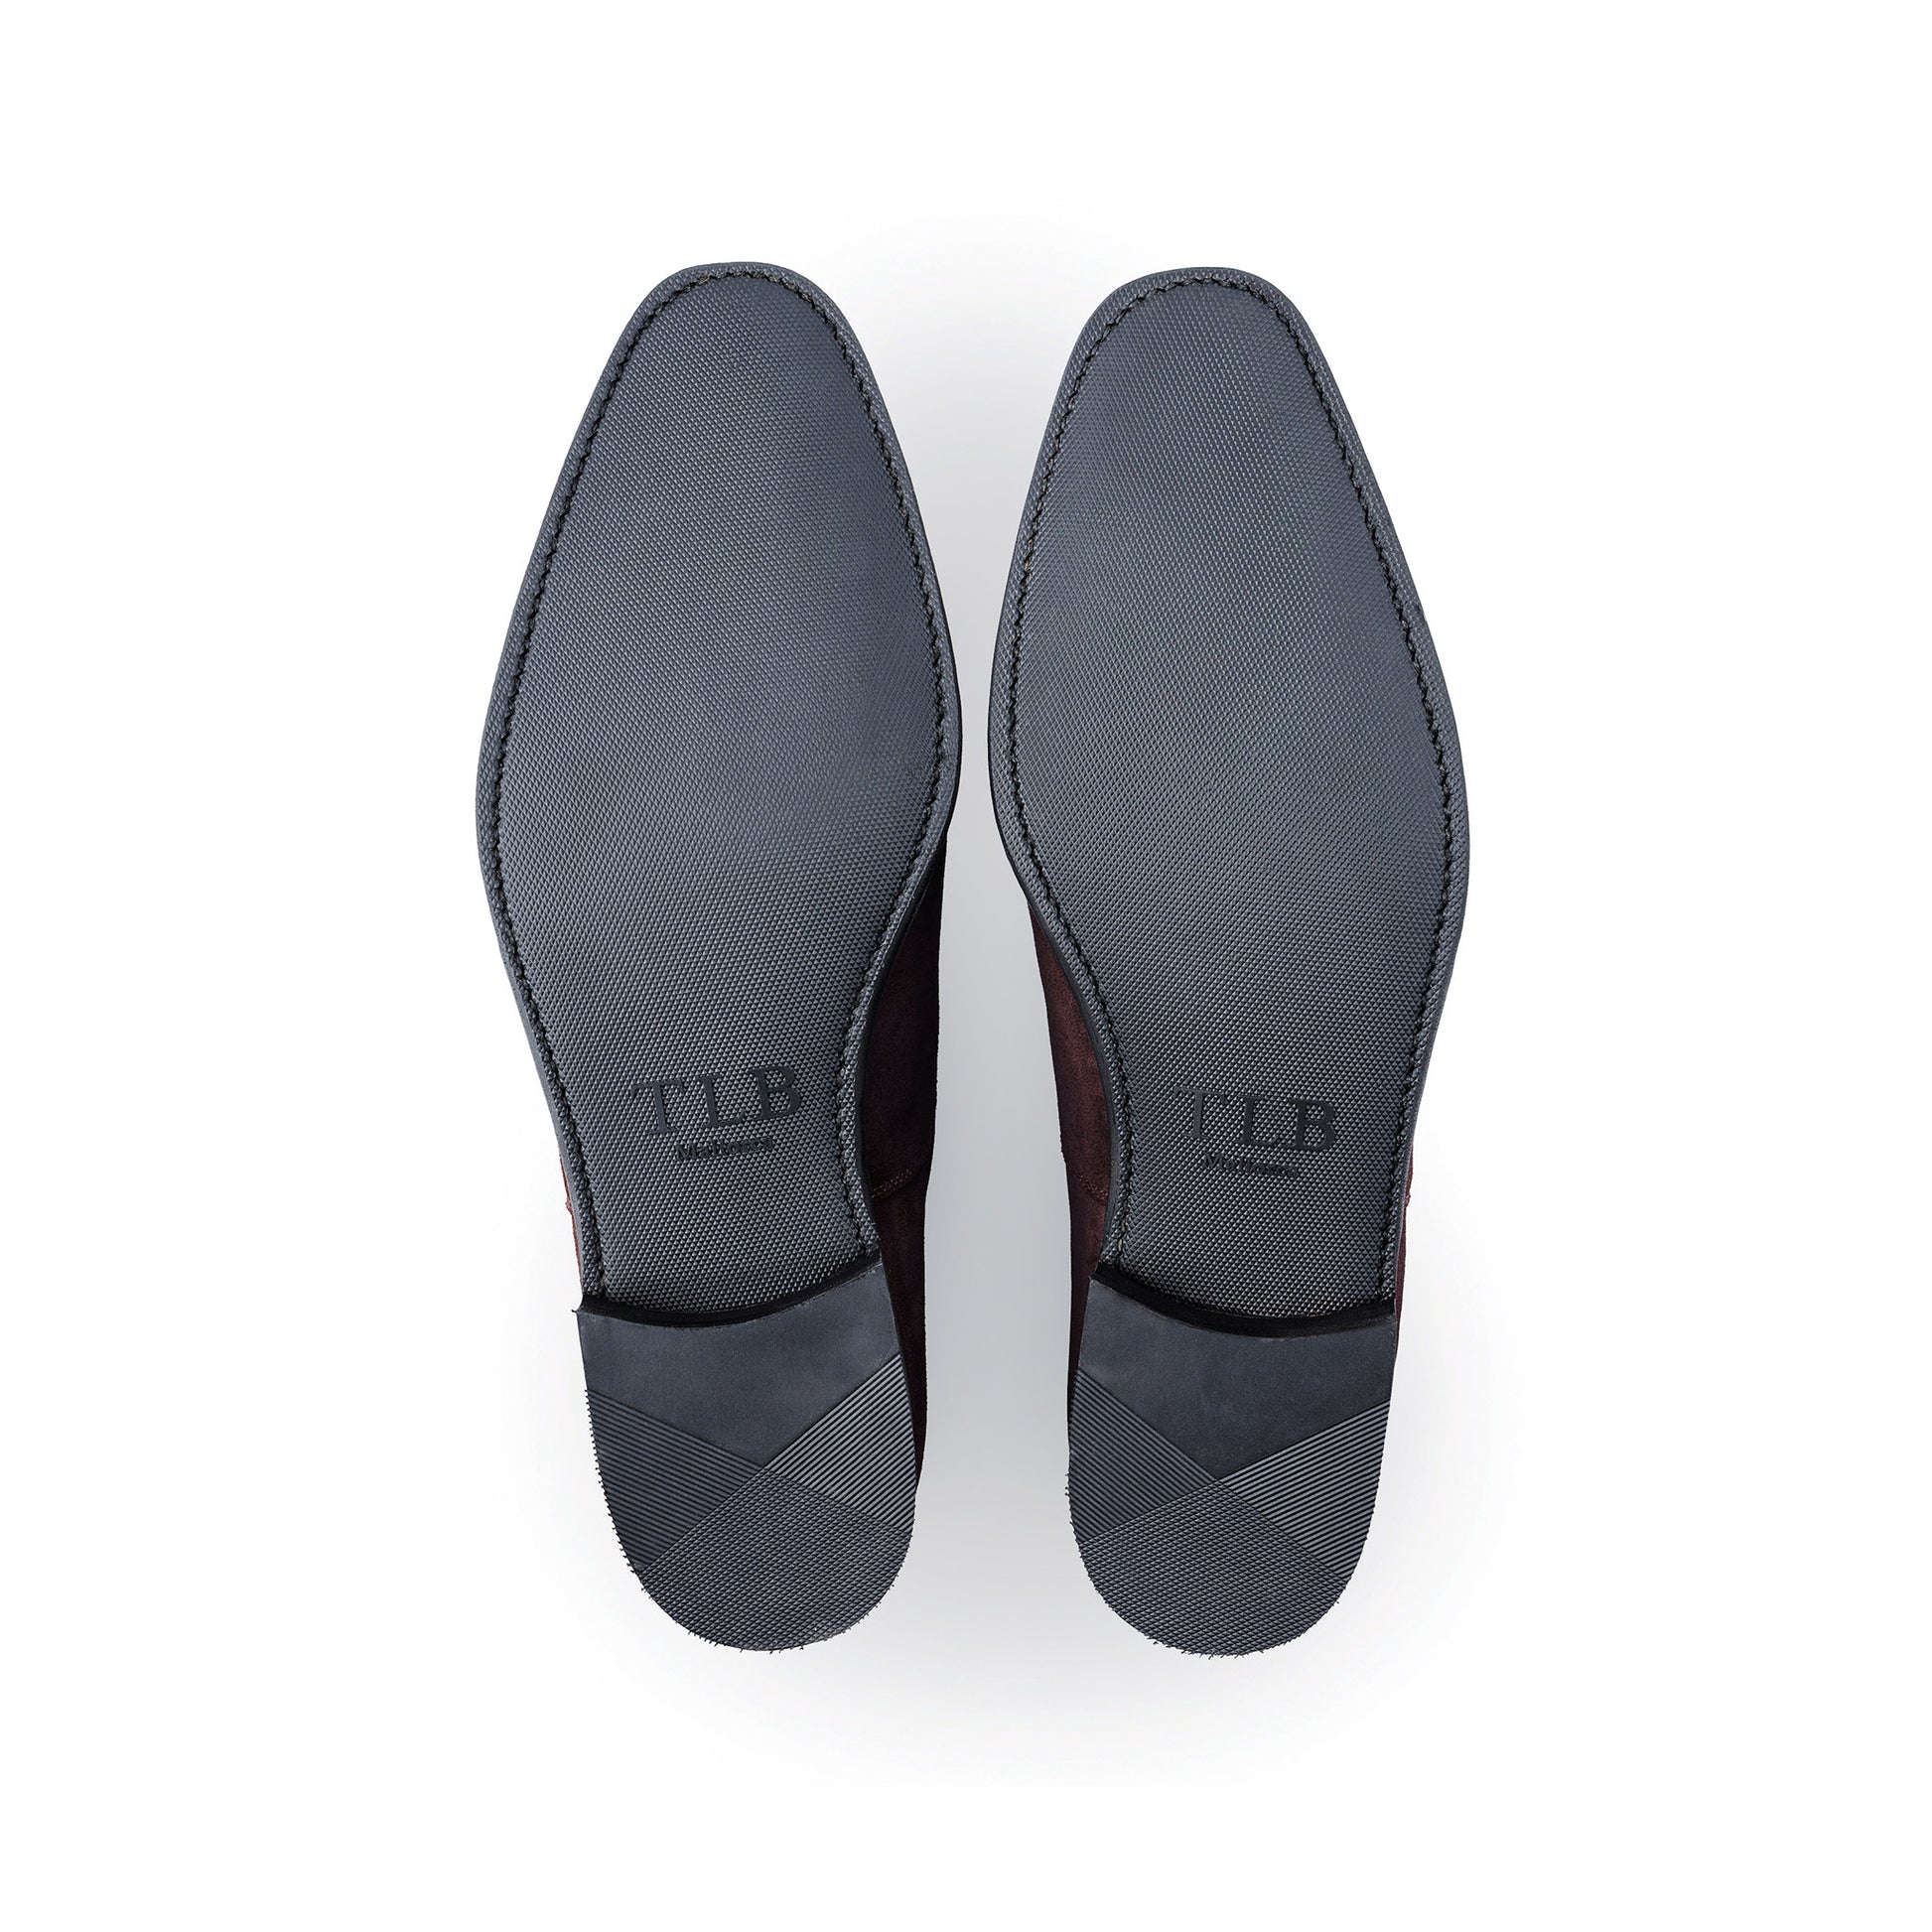 TLB Mallorca leather shoes 211 / GOYA / HATCH GRAIN BLACK